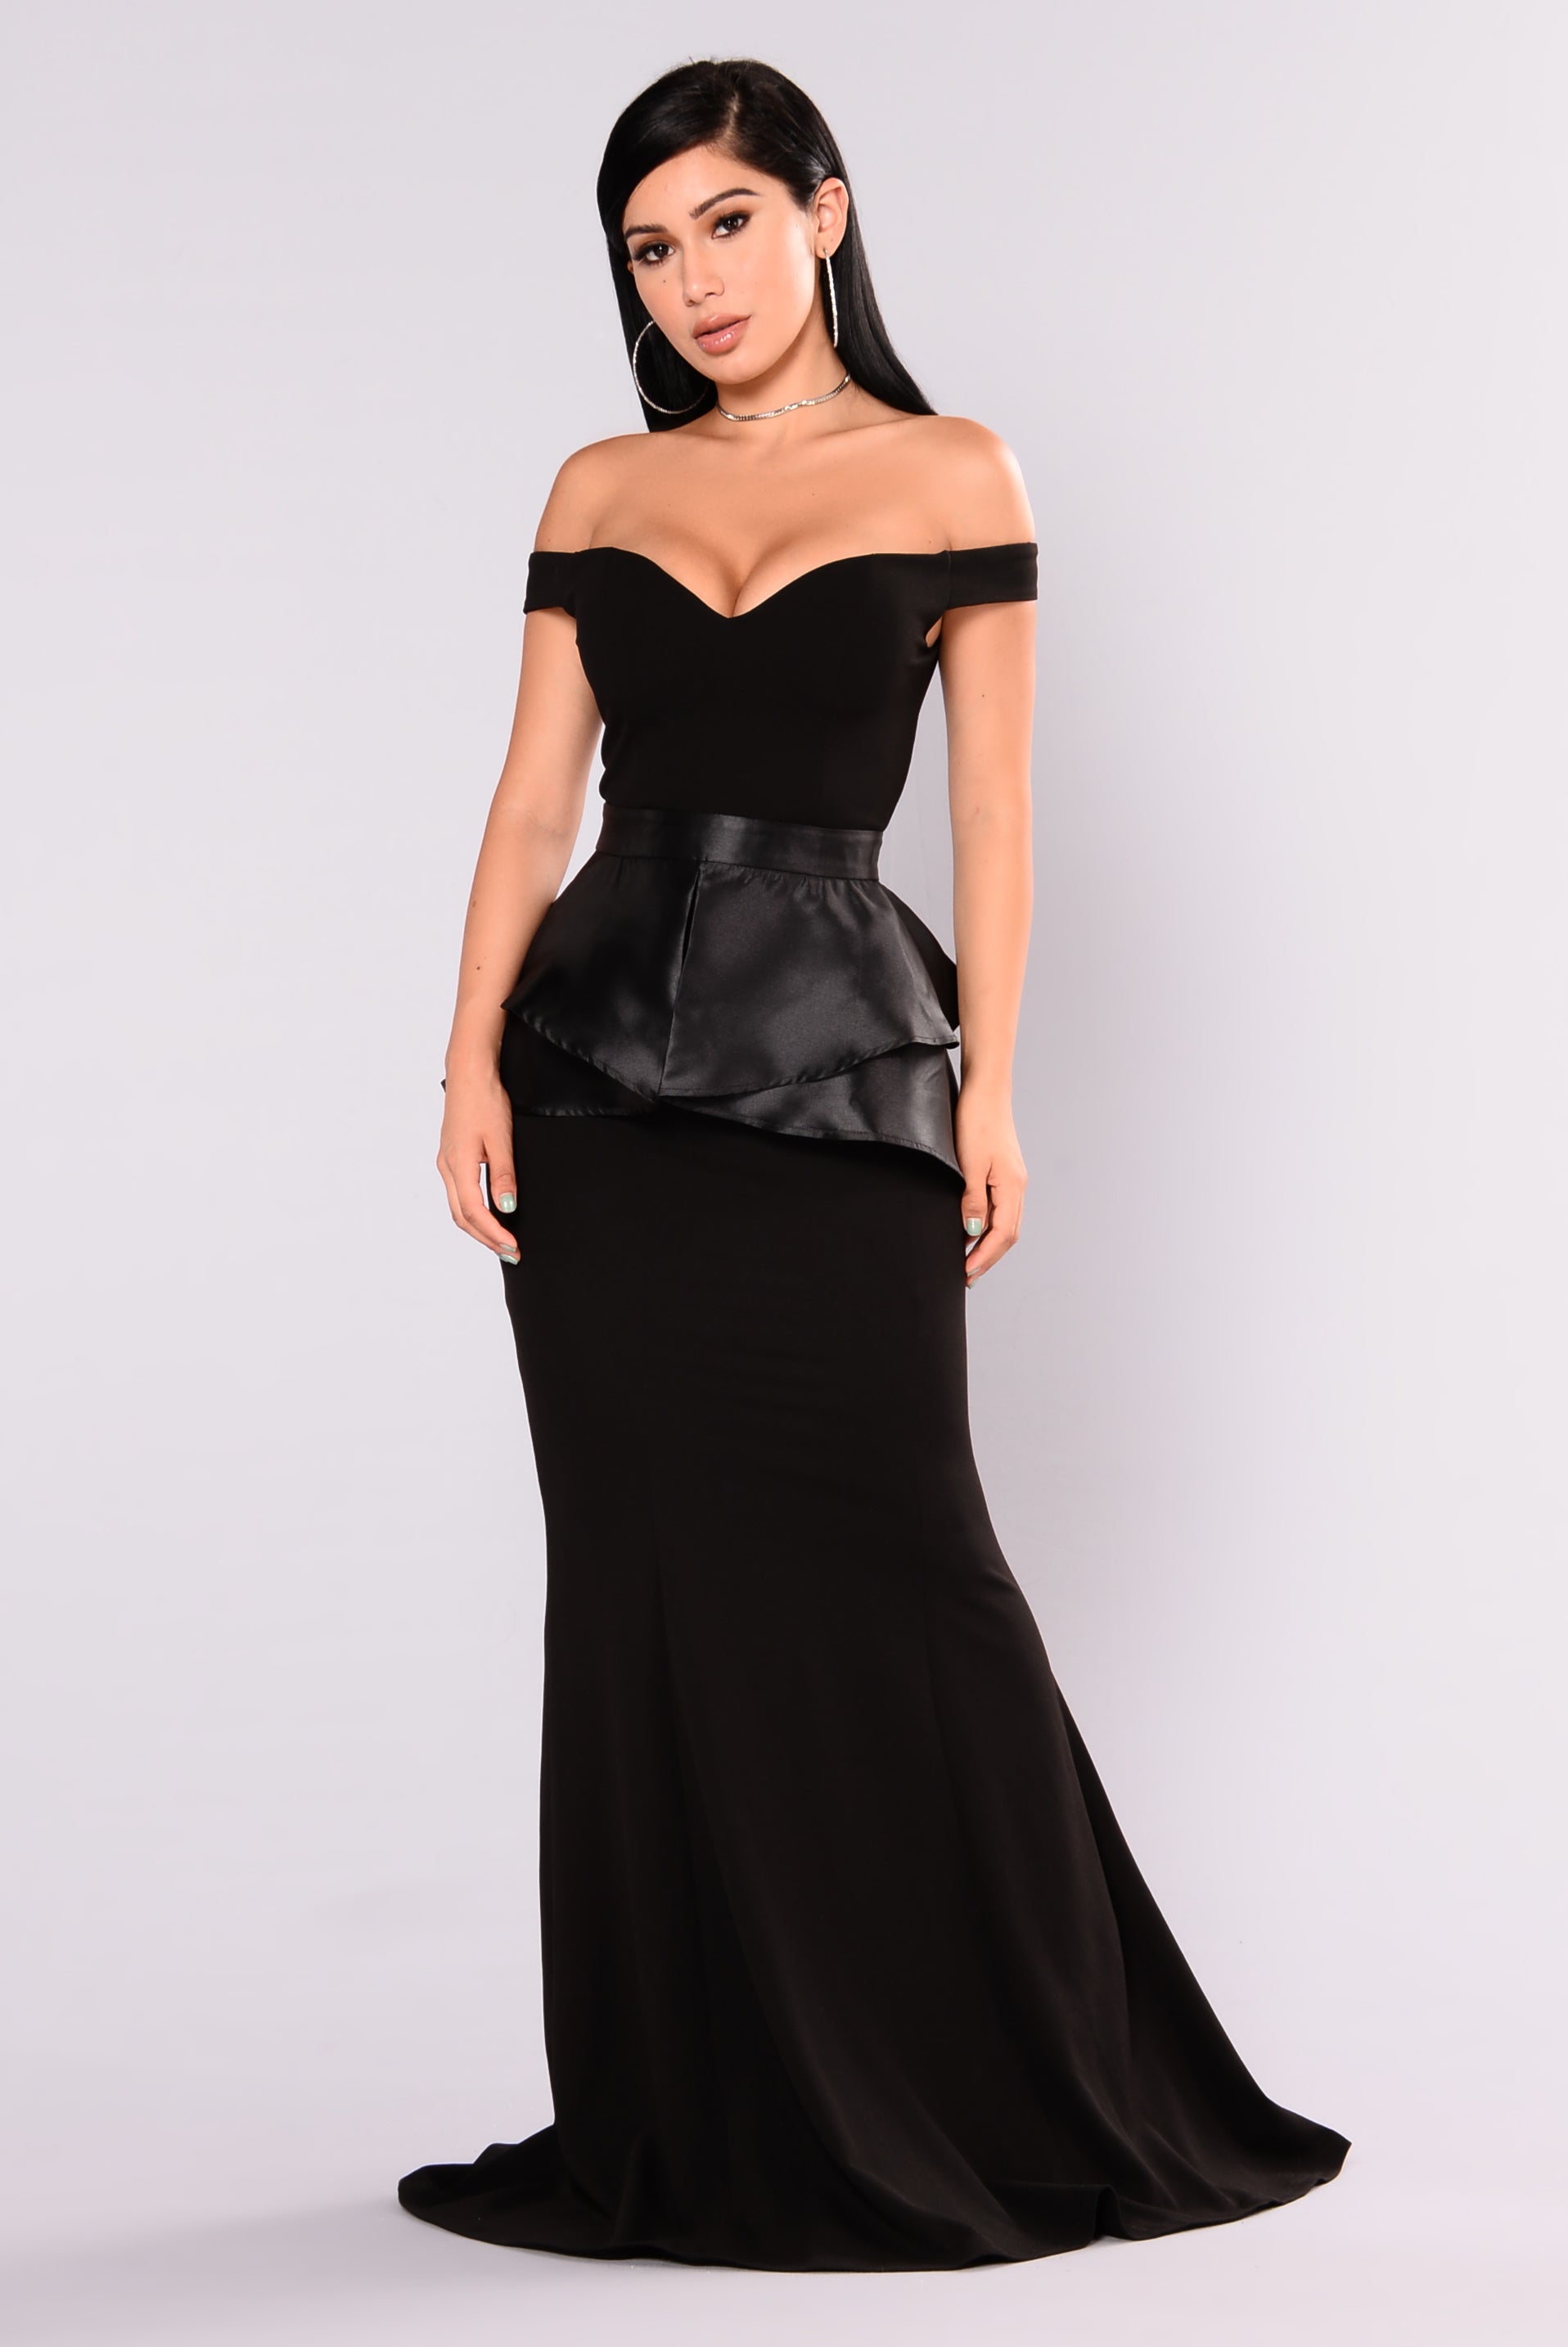 Beauty Queen Maxi Dress - Black